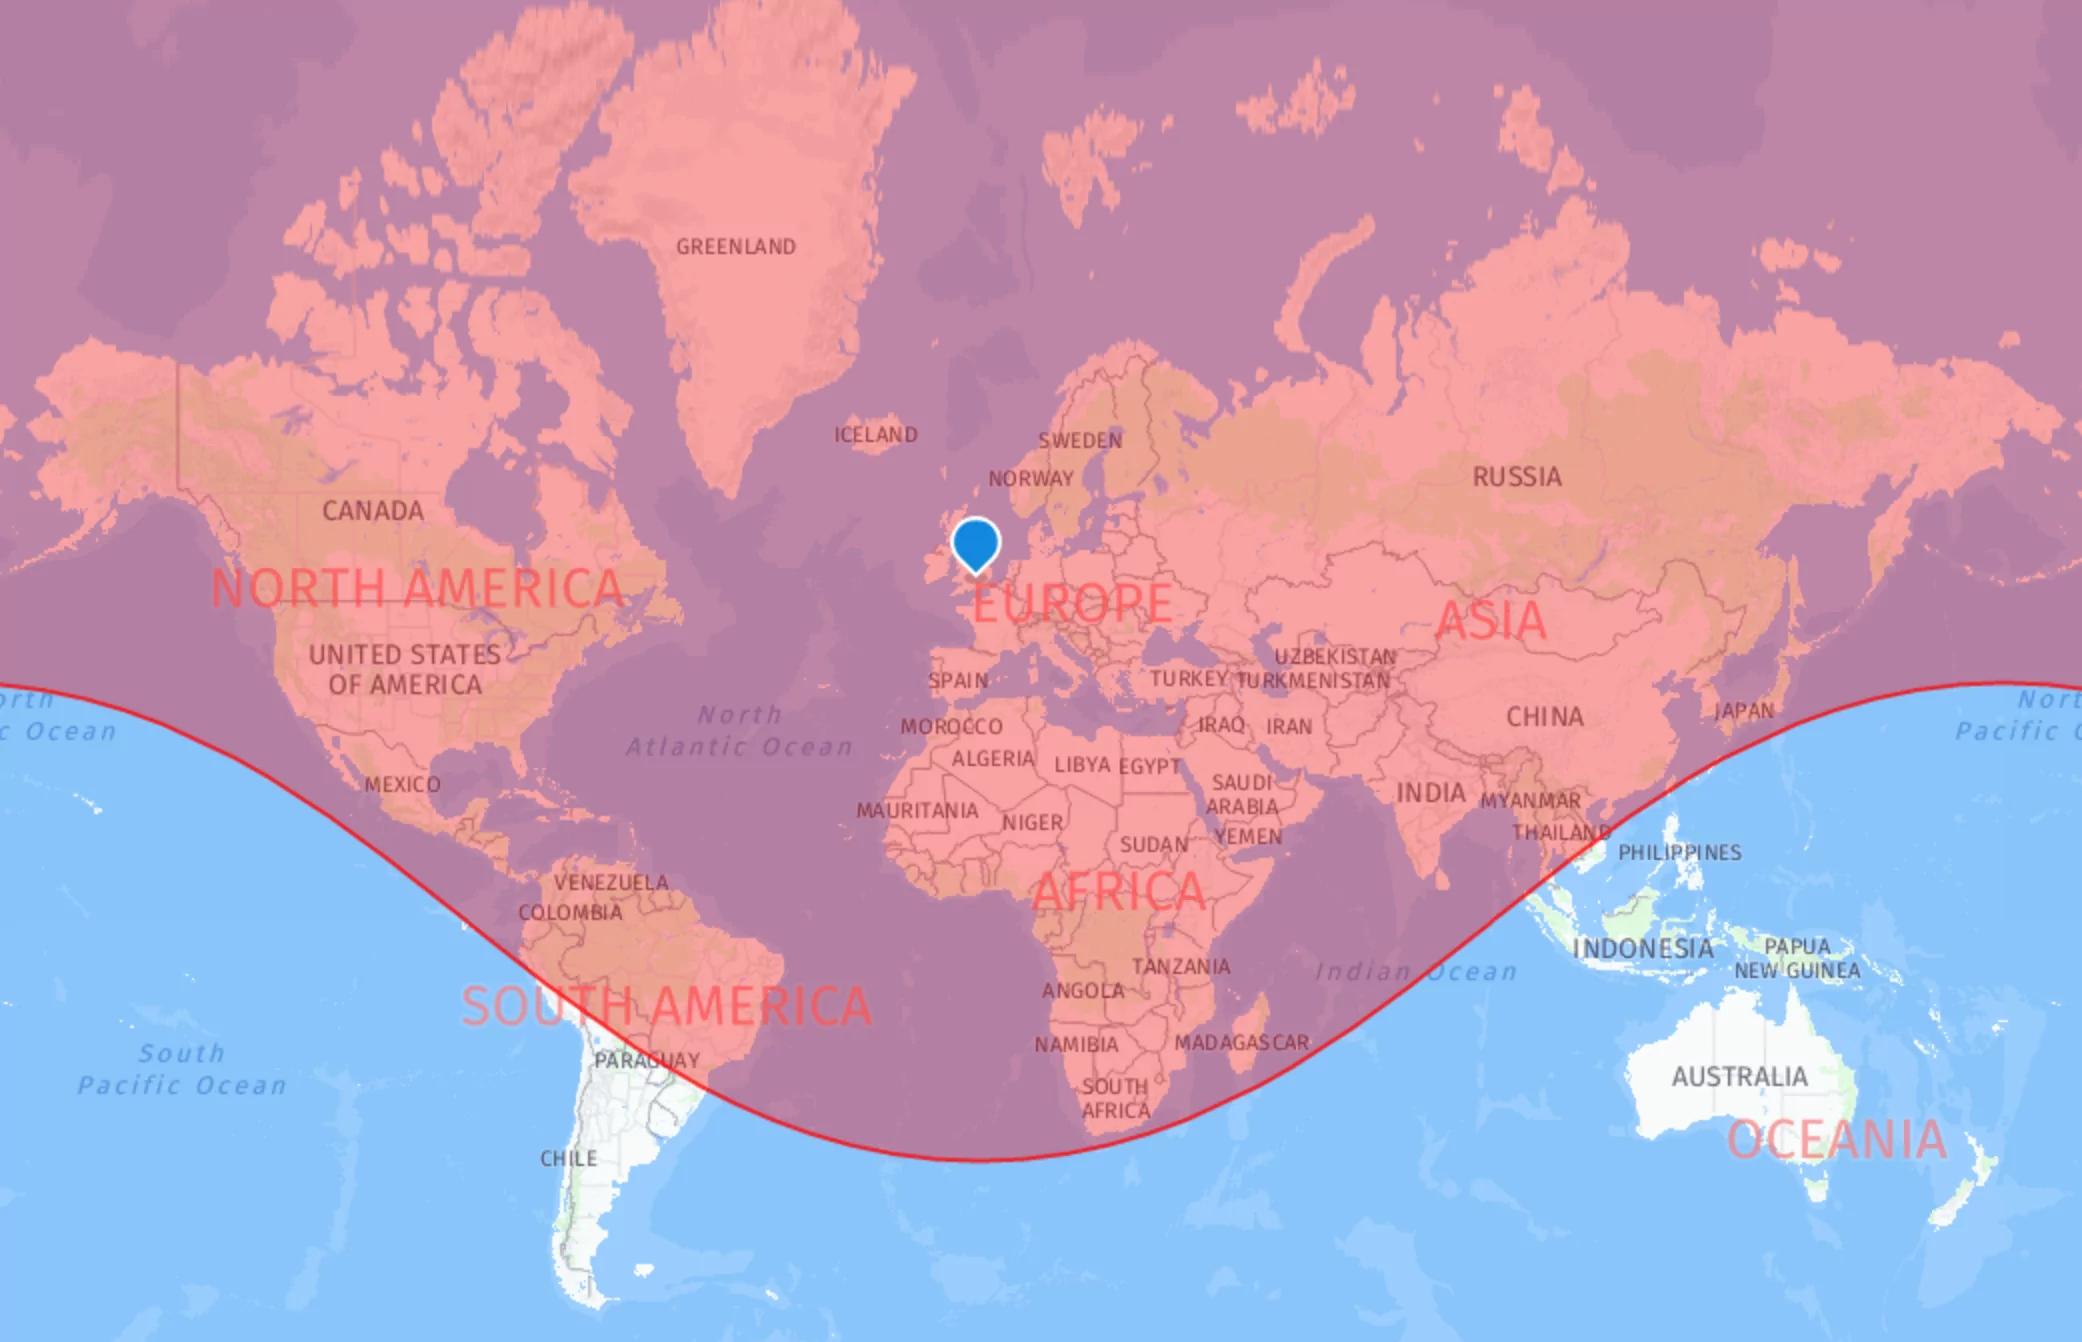 Dassault Falcon 8X range map with london as the origin city - range of 6450 nautical miles